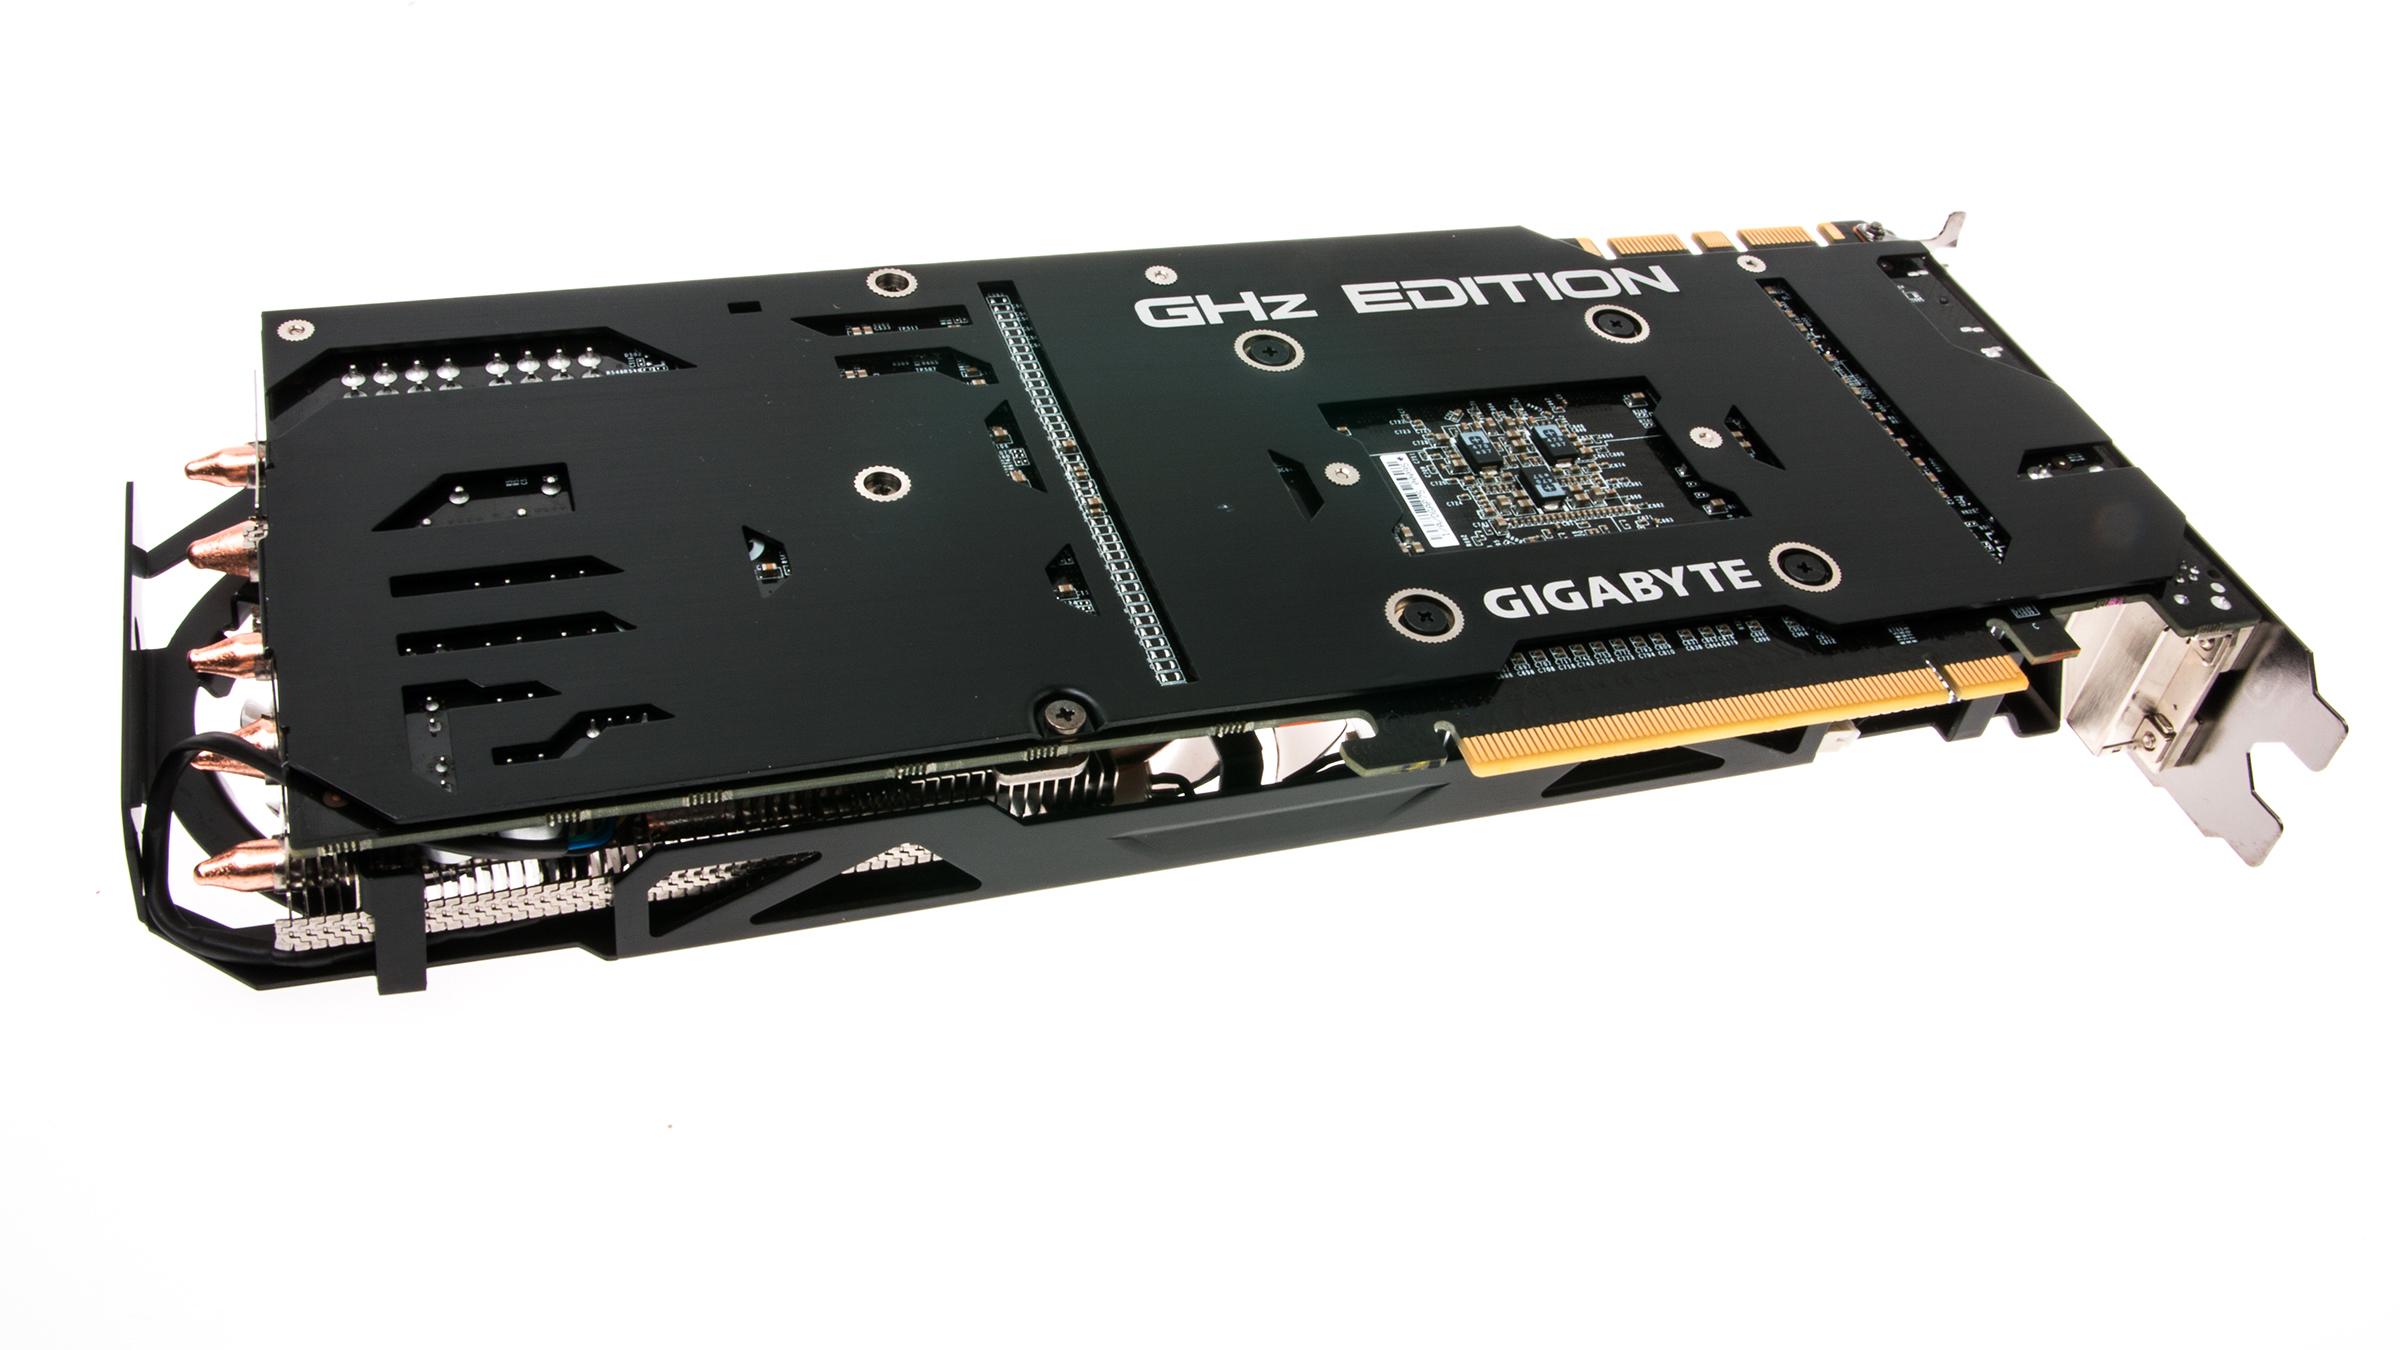 Minnet på Gigabyte GeForce GTX 780 GHz Edition lar seg villig overklokke.Foto: Varg Aamo, Hardware.no